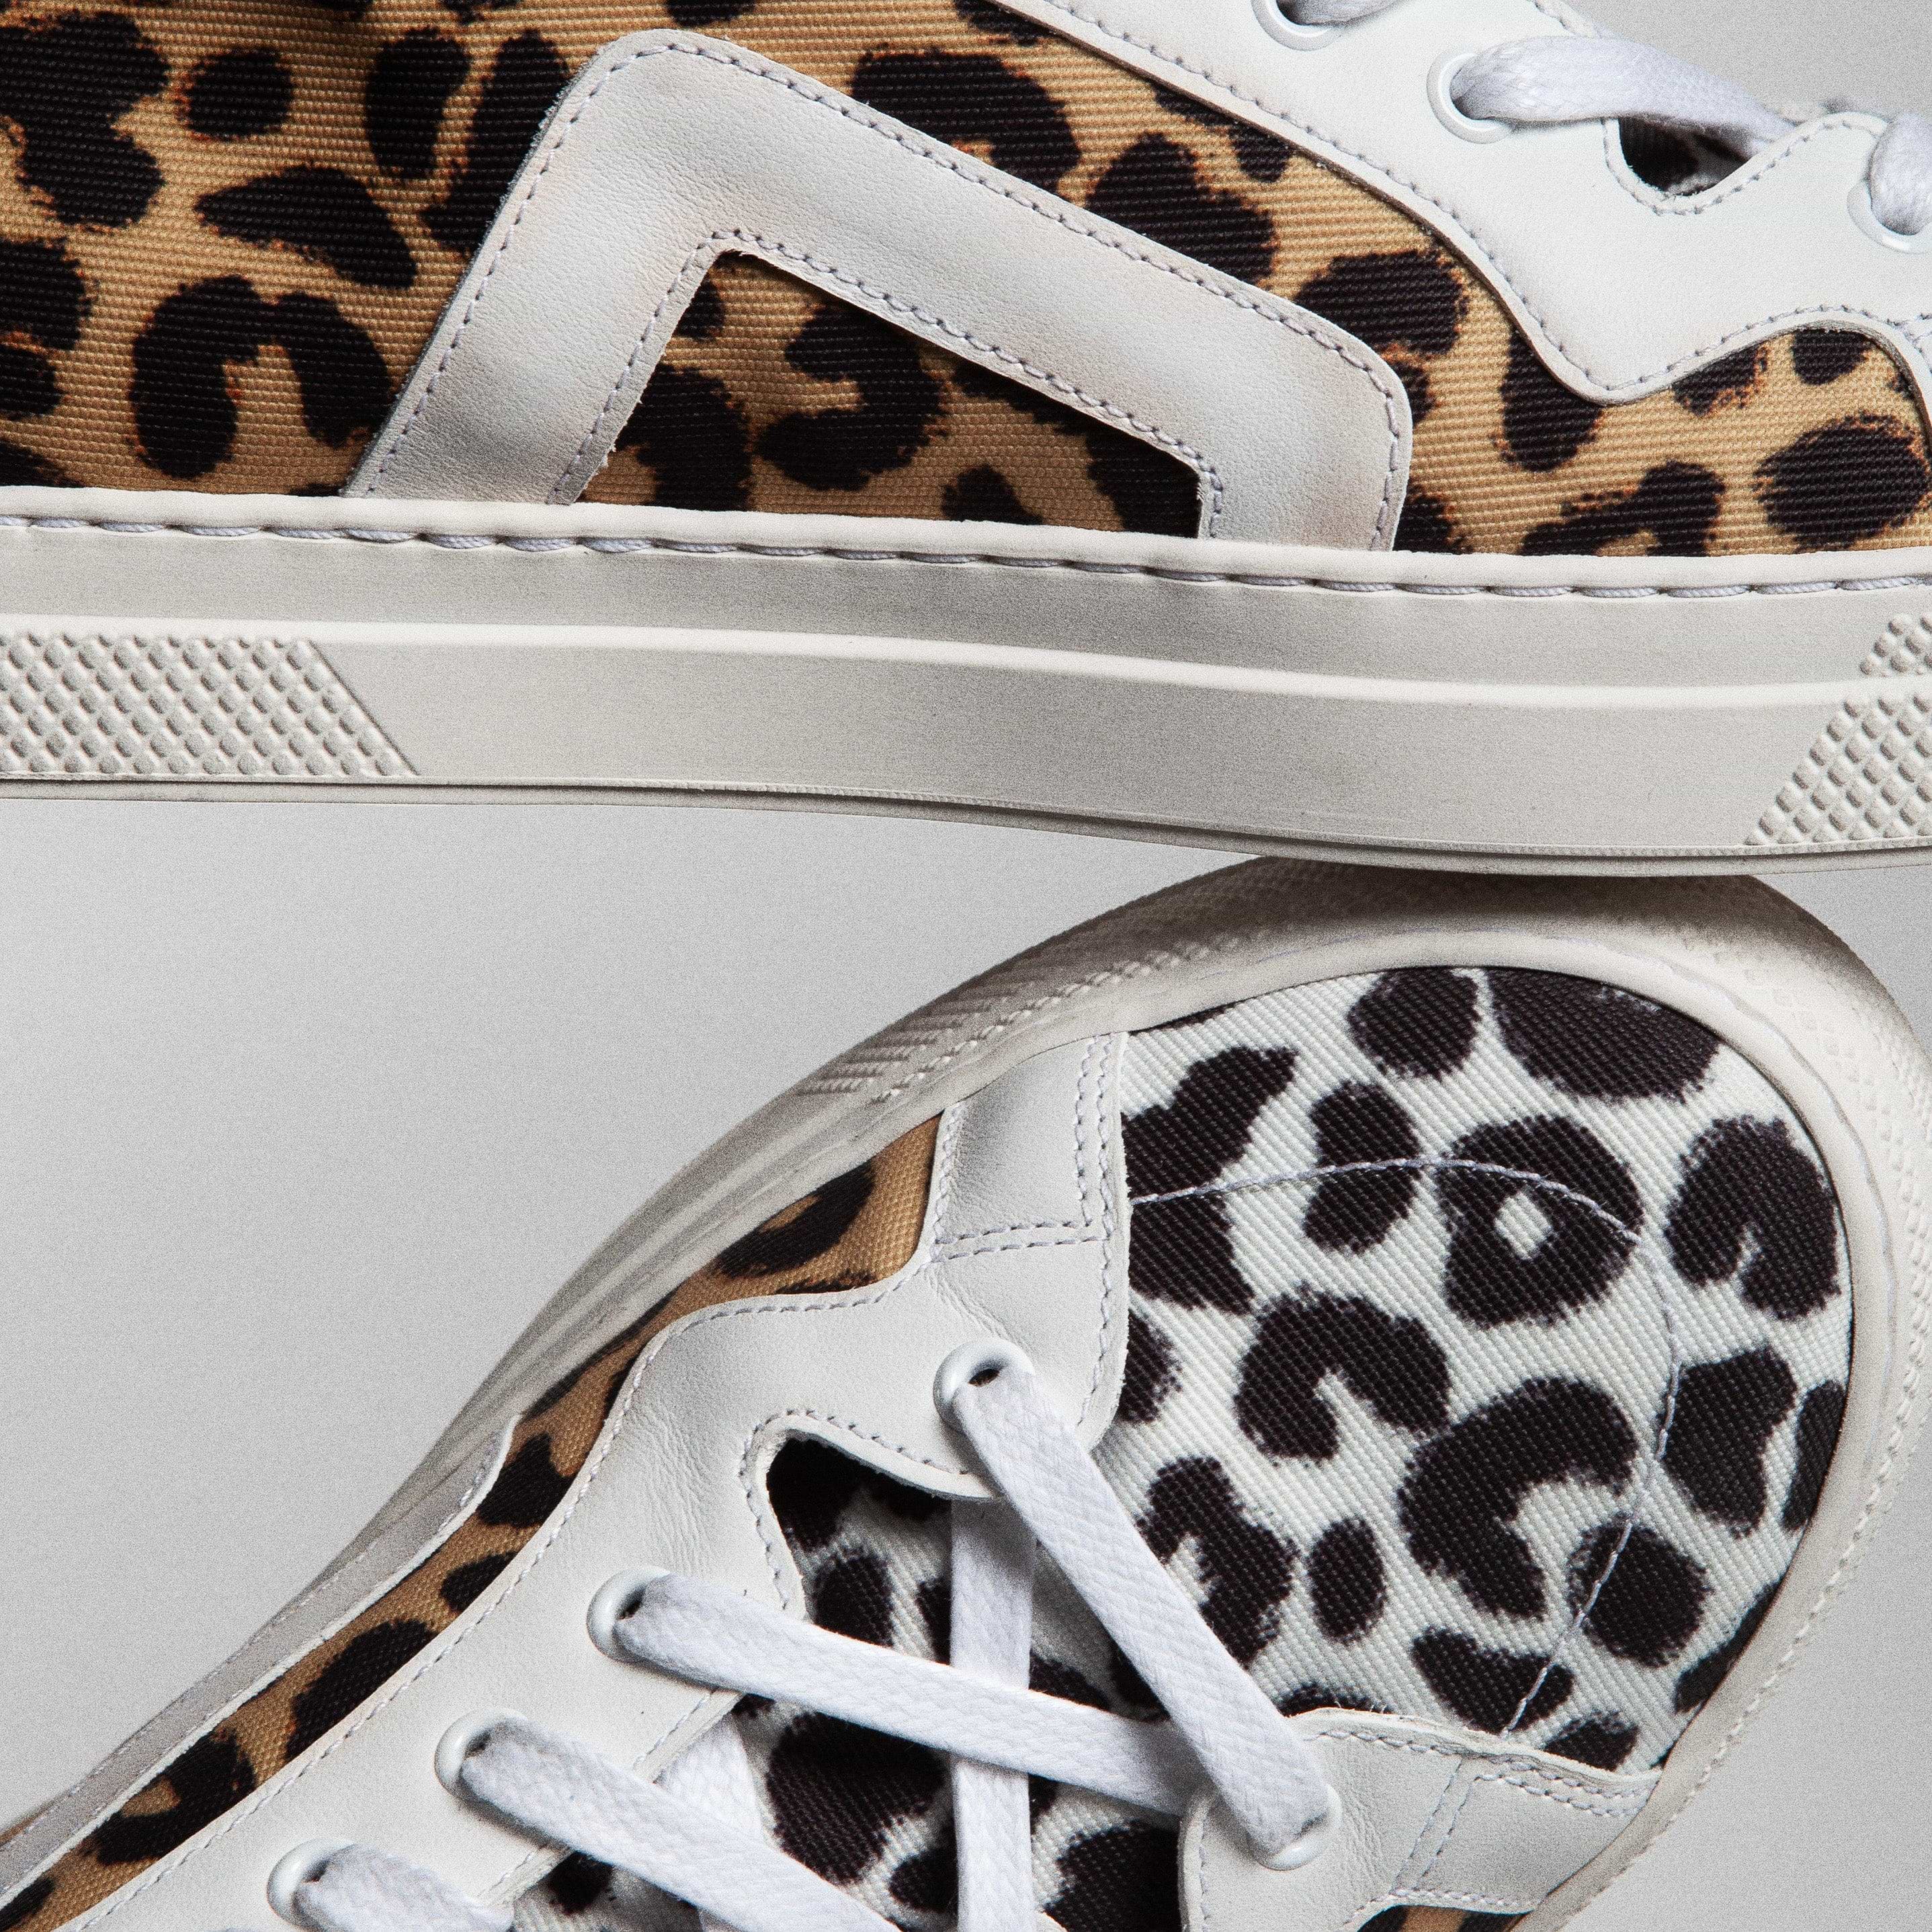 VANS Slip On Leopard Print Sneakers Shoes - Men 4 Women 5.5 | eBay